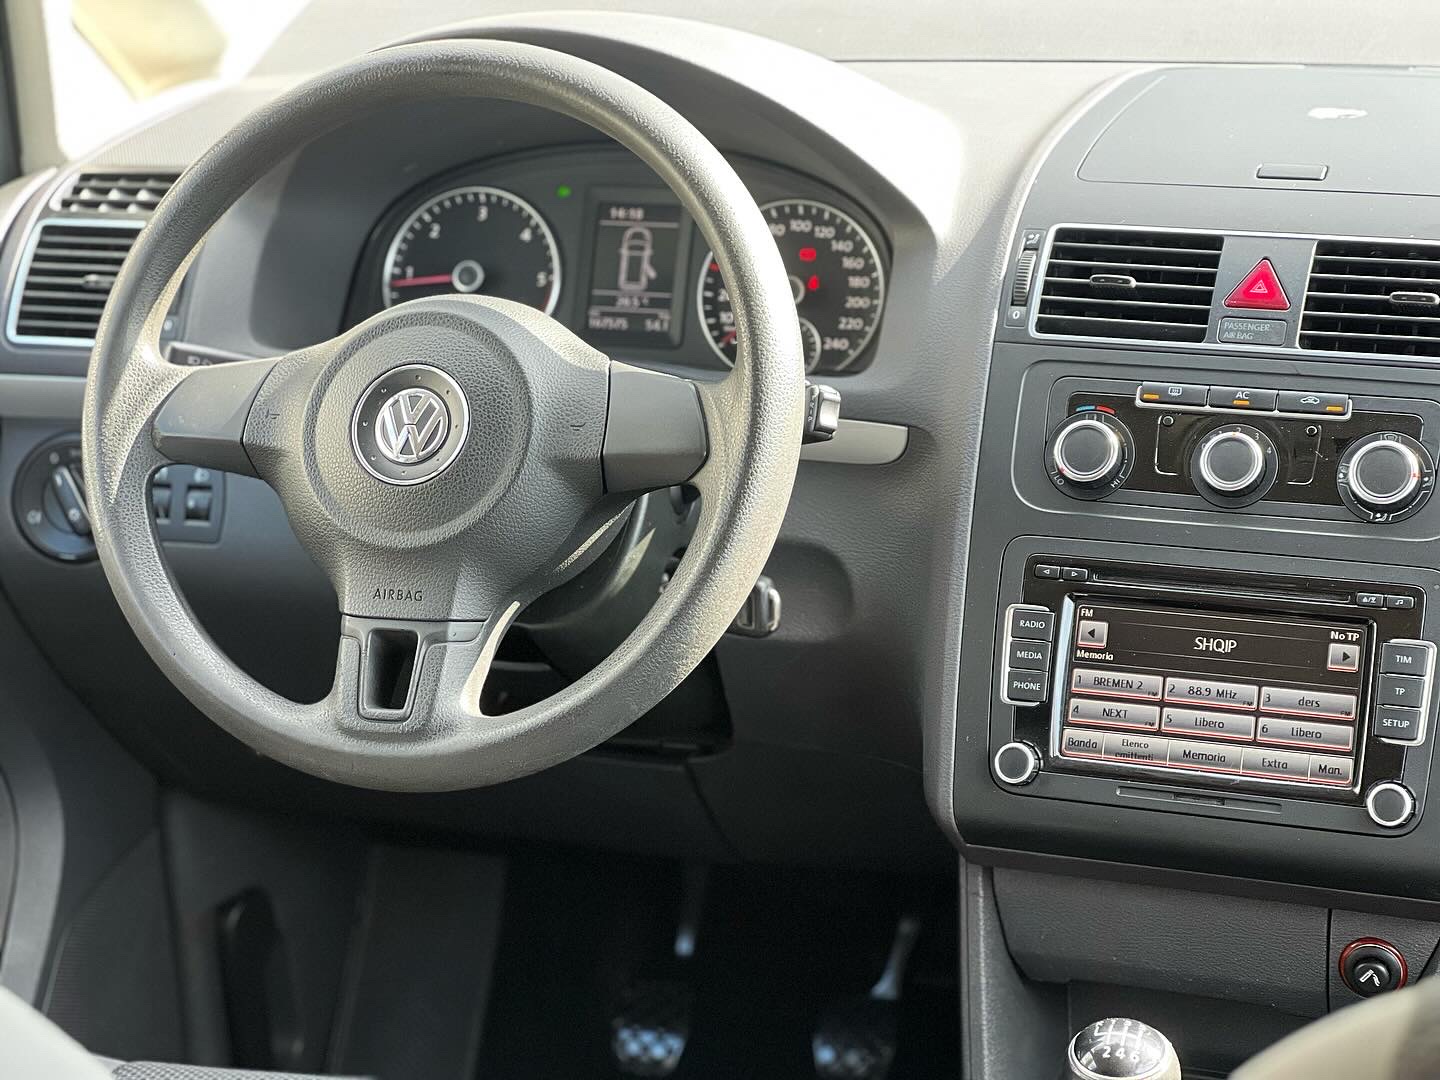 VW TOURAN 1.6 NAFTE 👉 2012 👈 KAMBIO MANUALE - 5 VENDE , 8.150 Euro